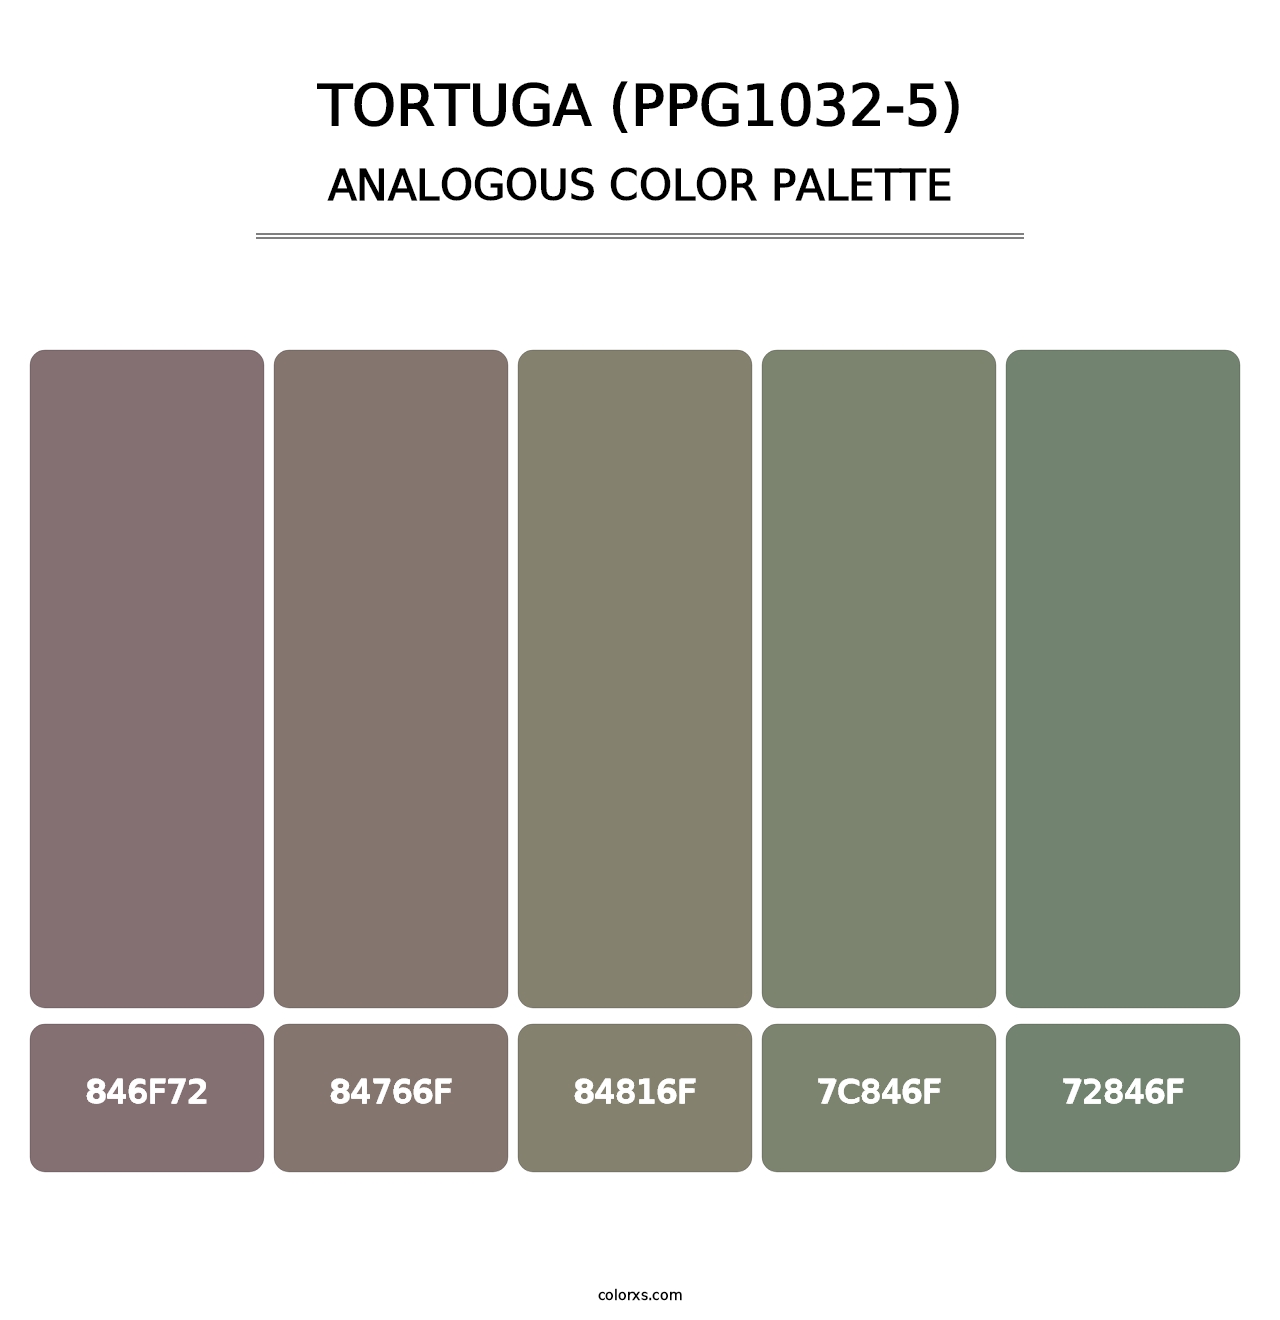 Tortuga (PPG1032-5) - Analogous Color Palette